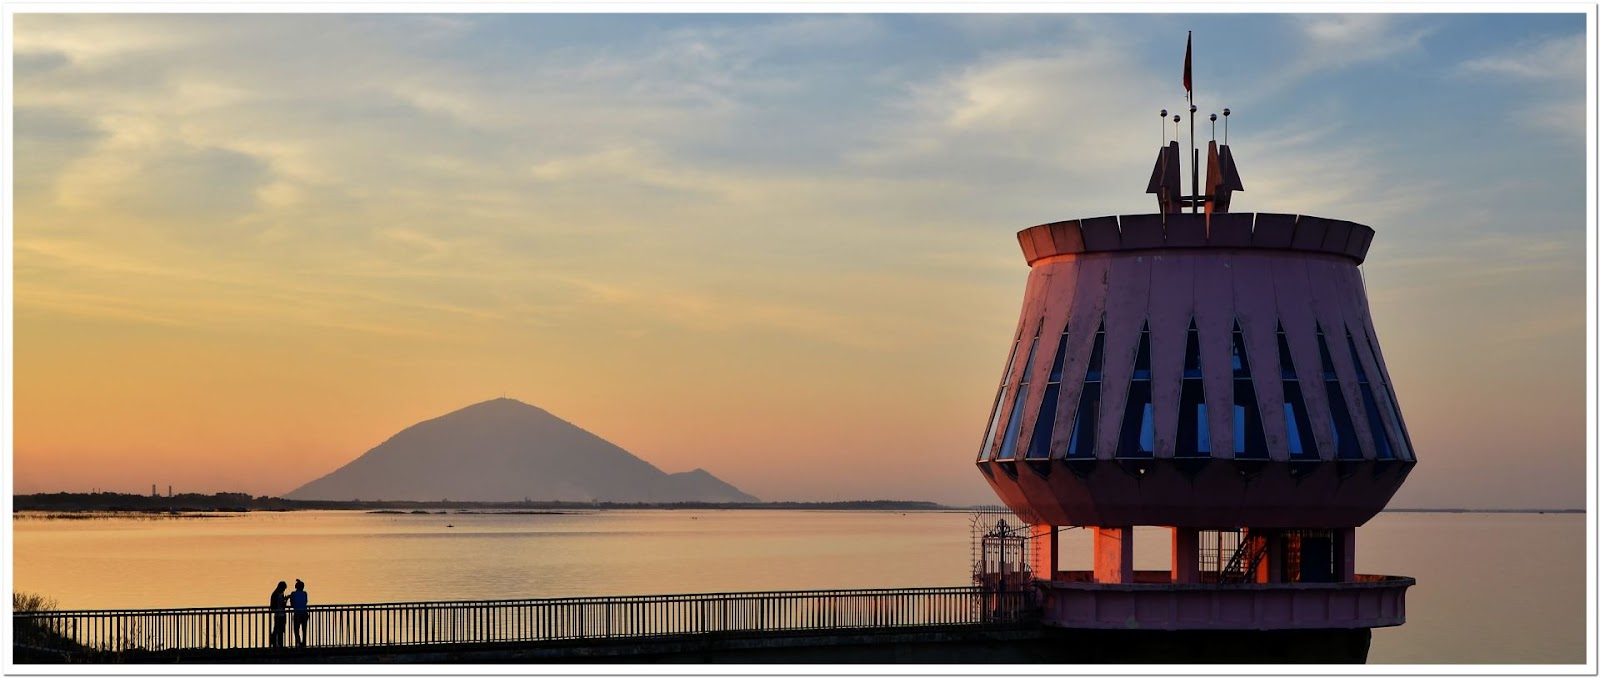 The poetic beauty at Dau Tieng Lake